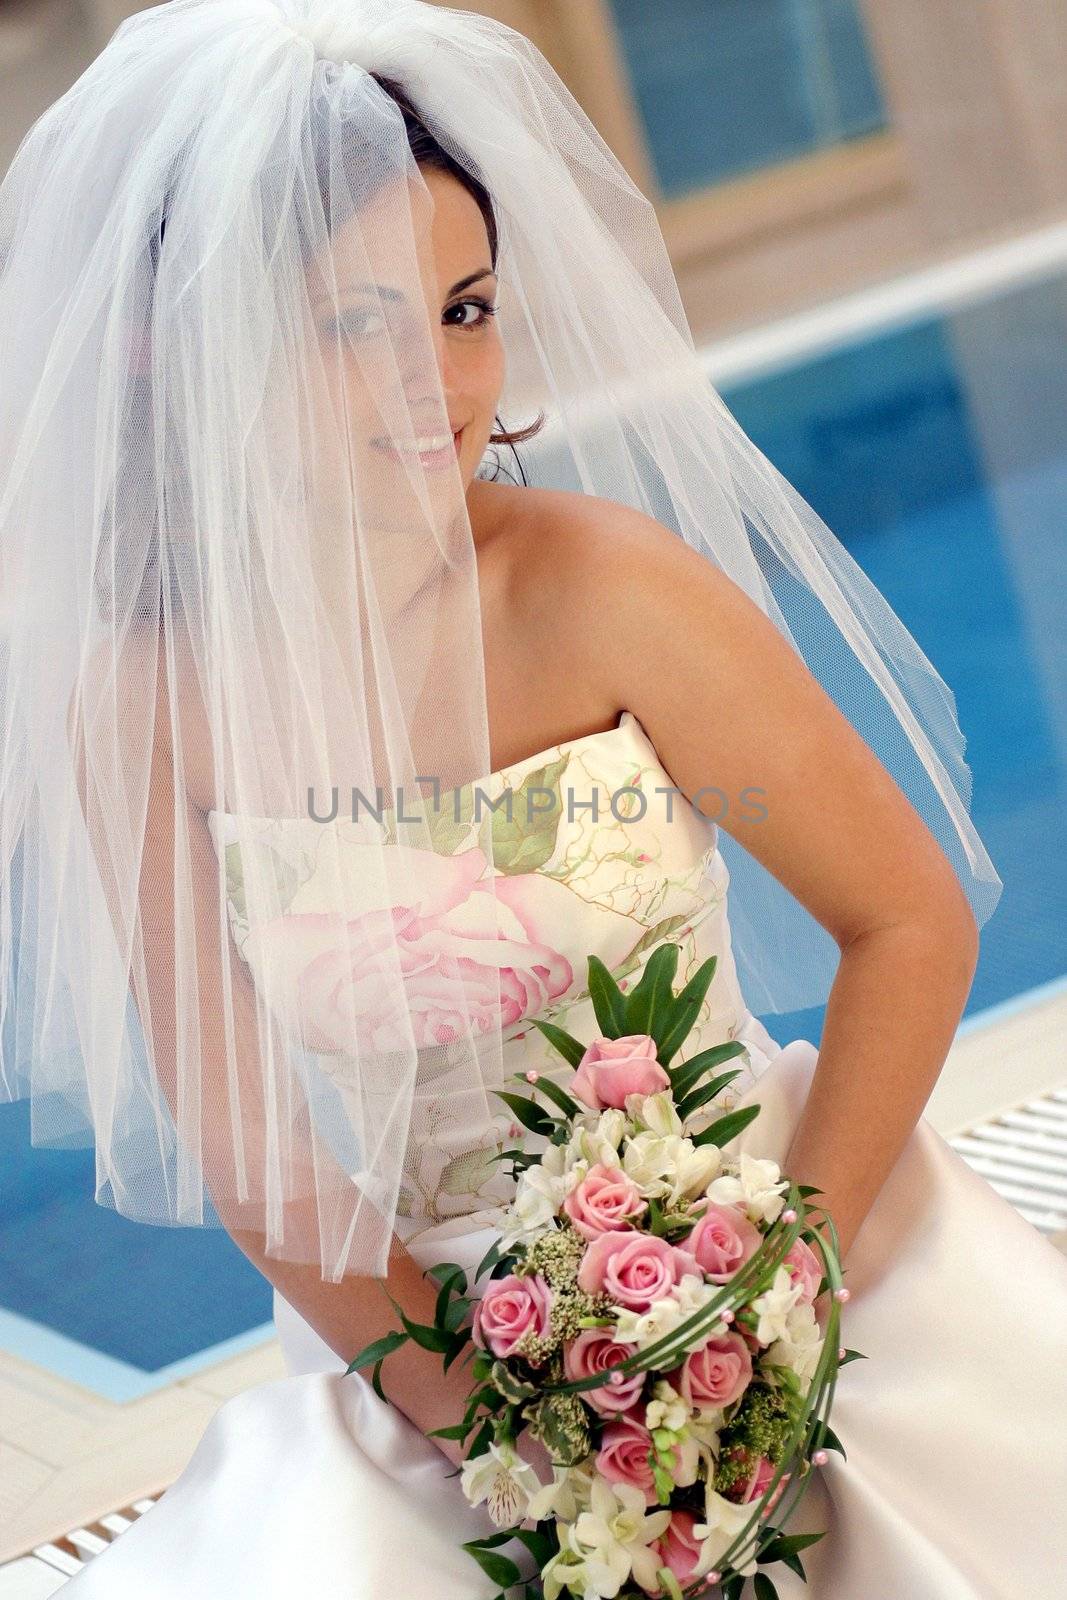 Smiling bride wearing veil by speedfighter